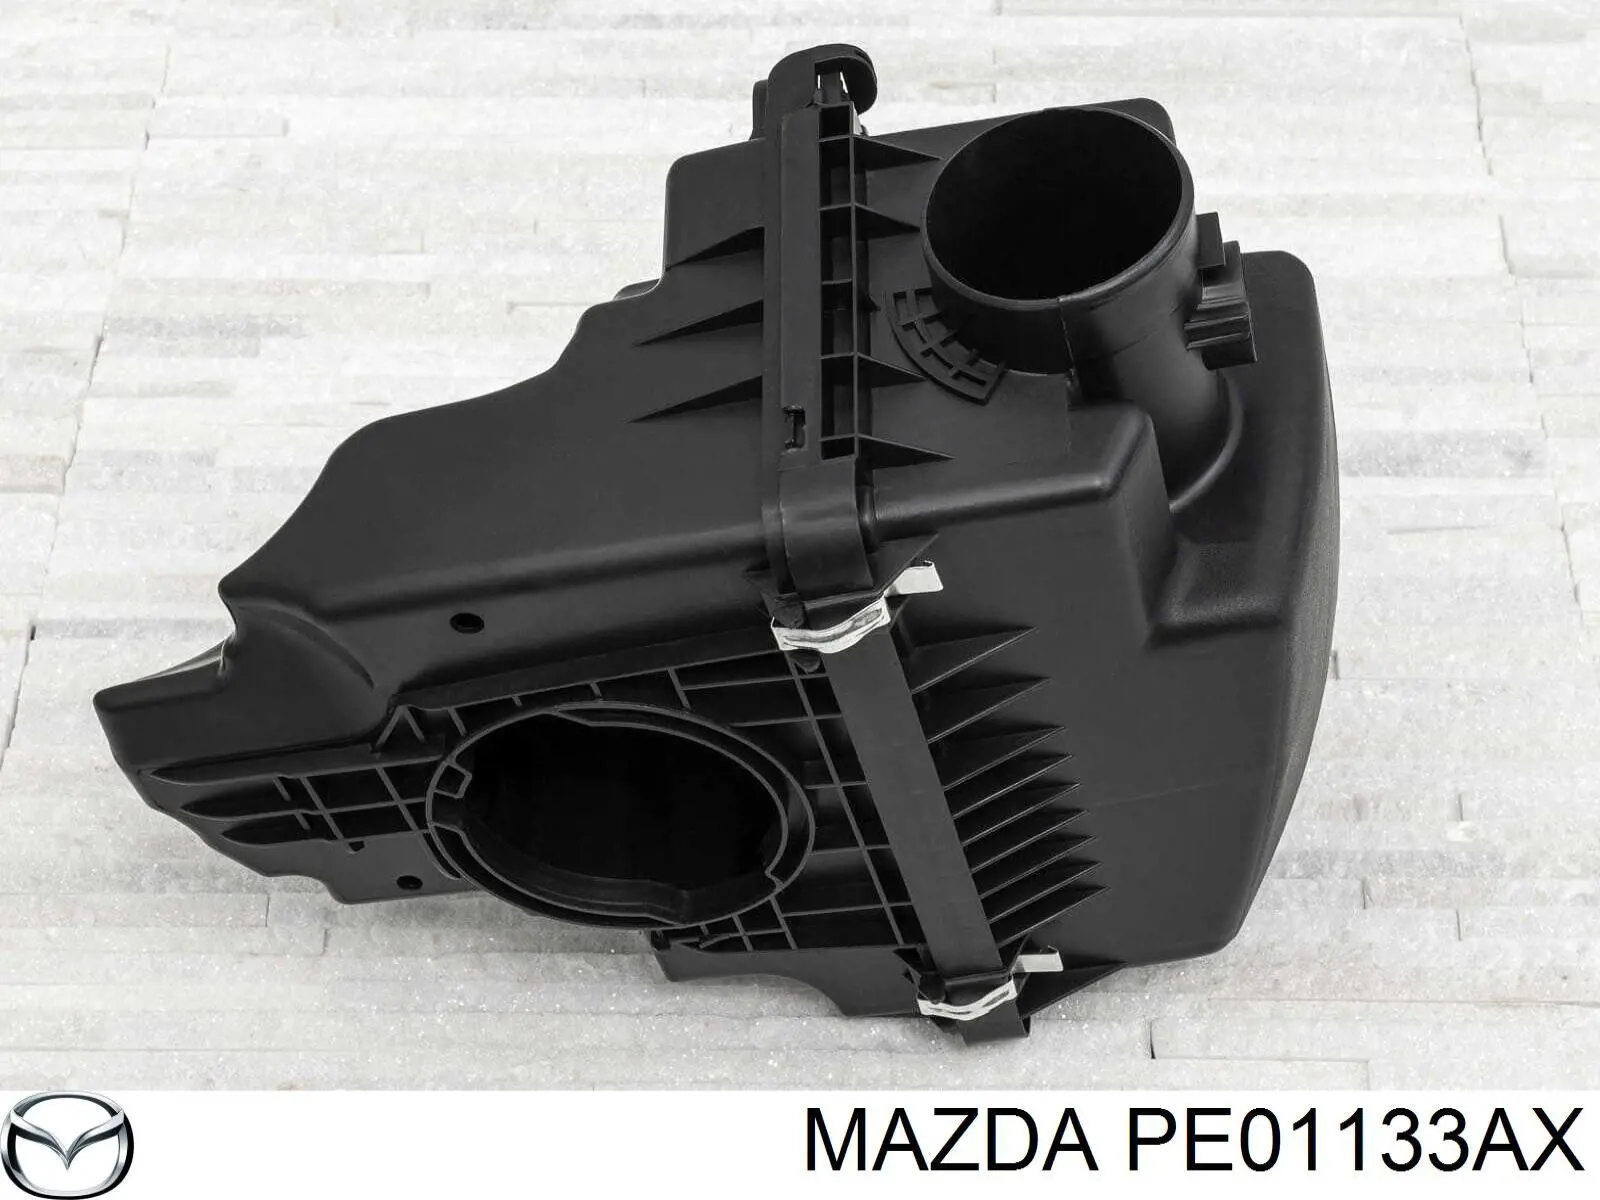 PE01133AX Mazda caixa de filtro de ar, parte superior